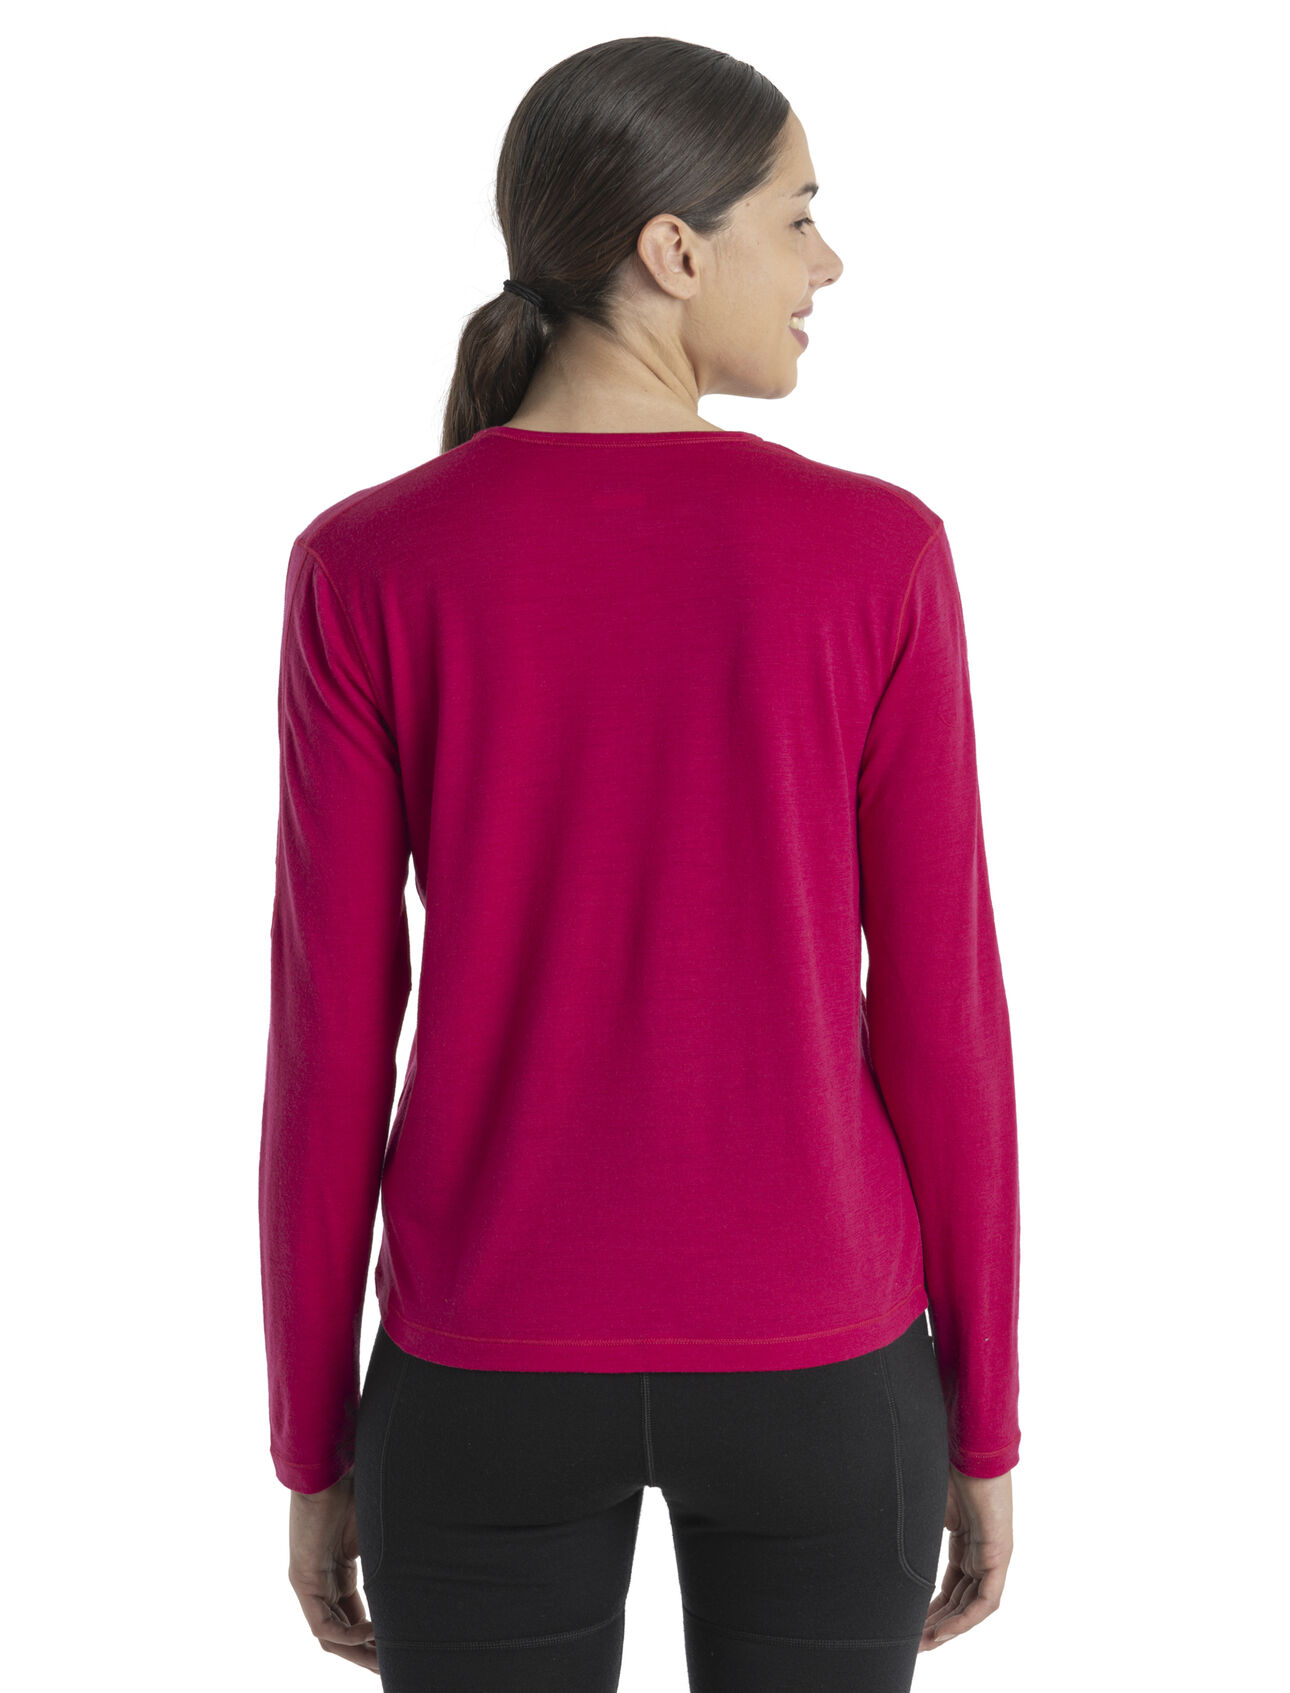 Women's 200 ZoneKnit™ Merino Energy Wind Long Sleeve T-Shirt